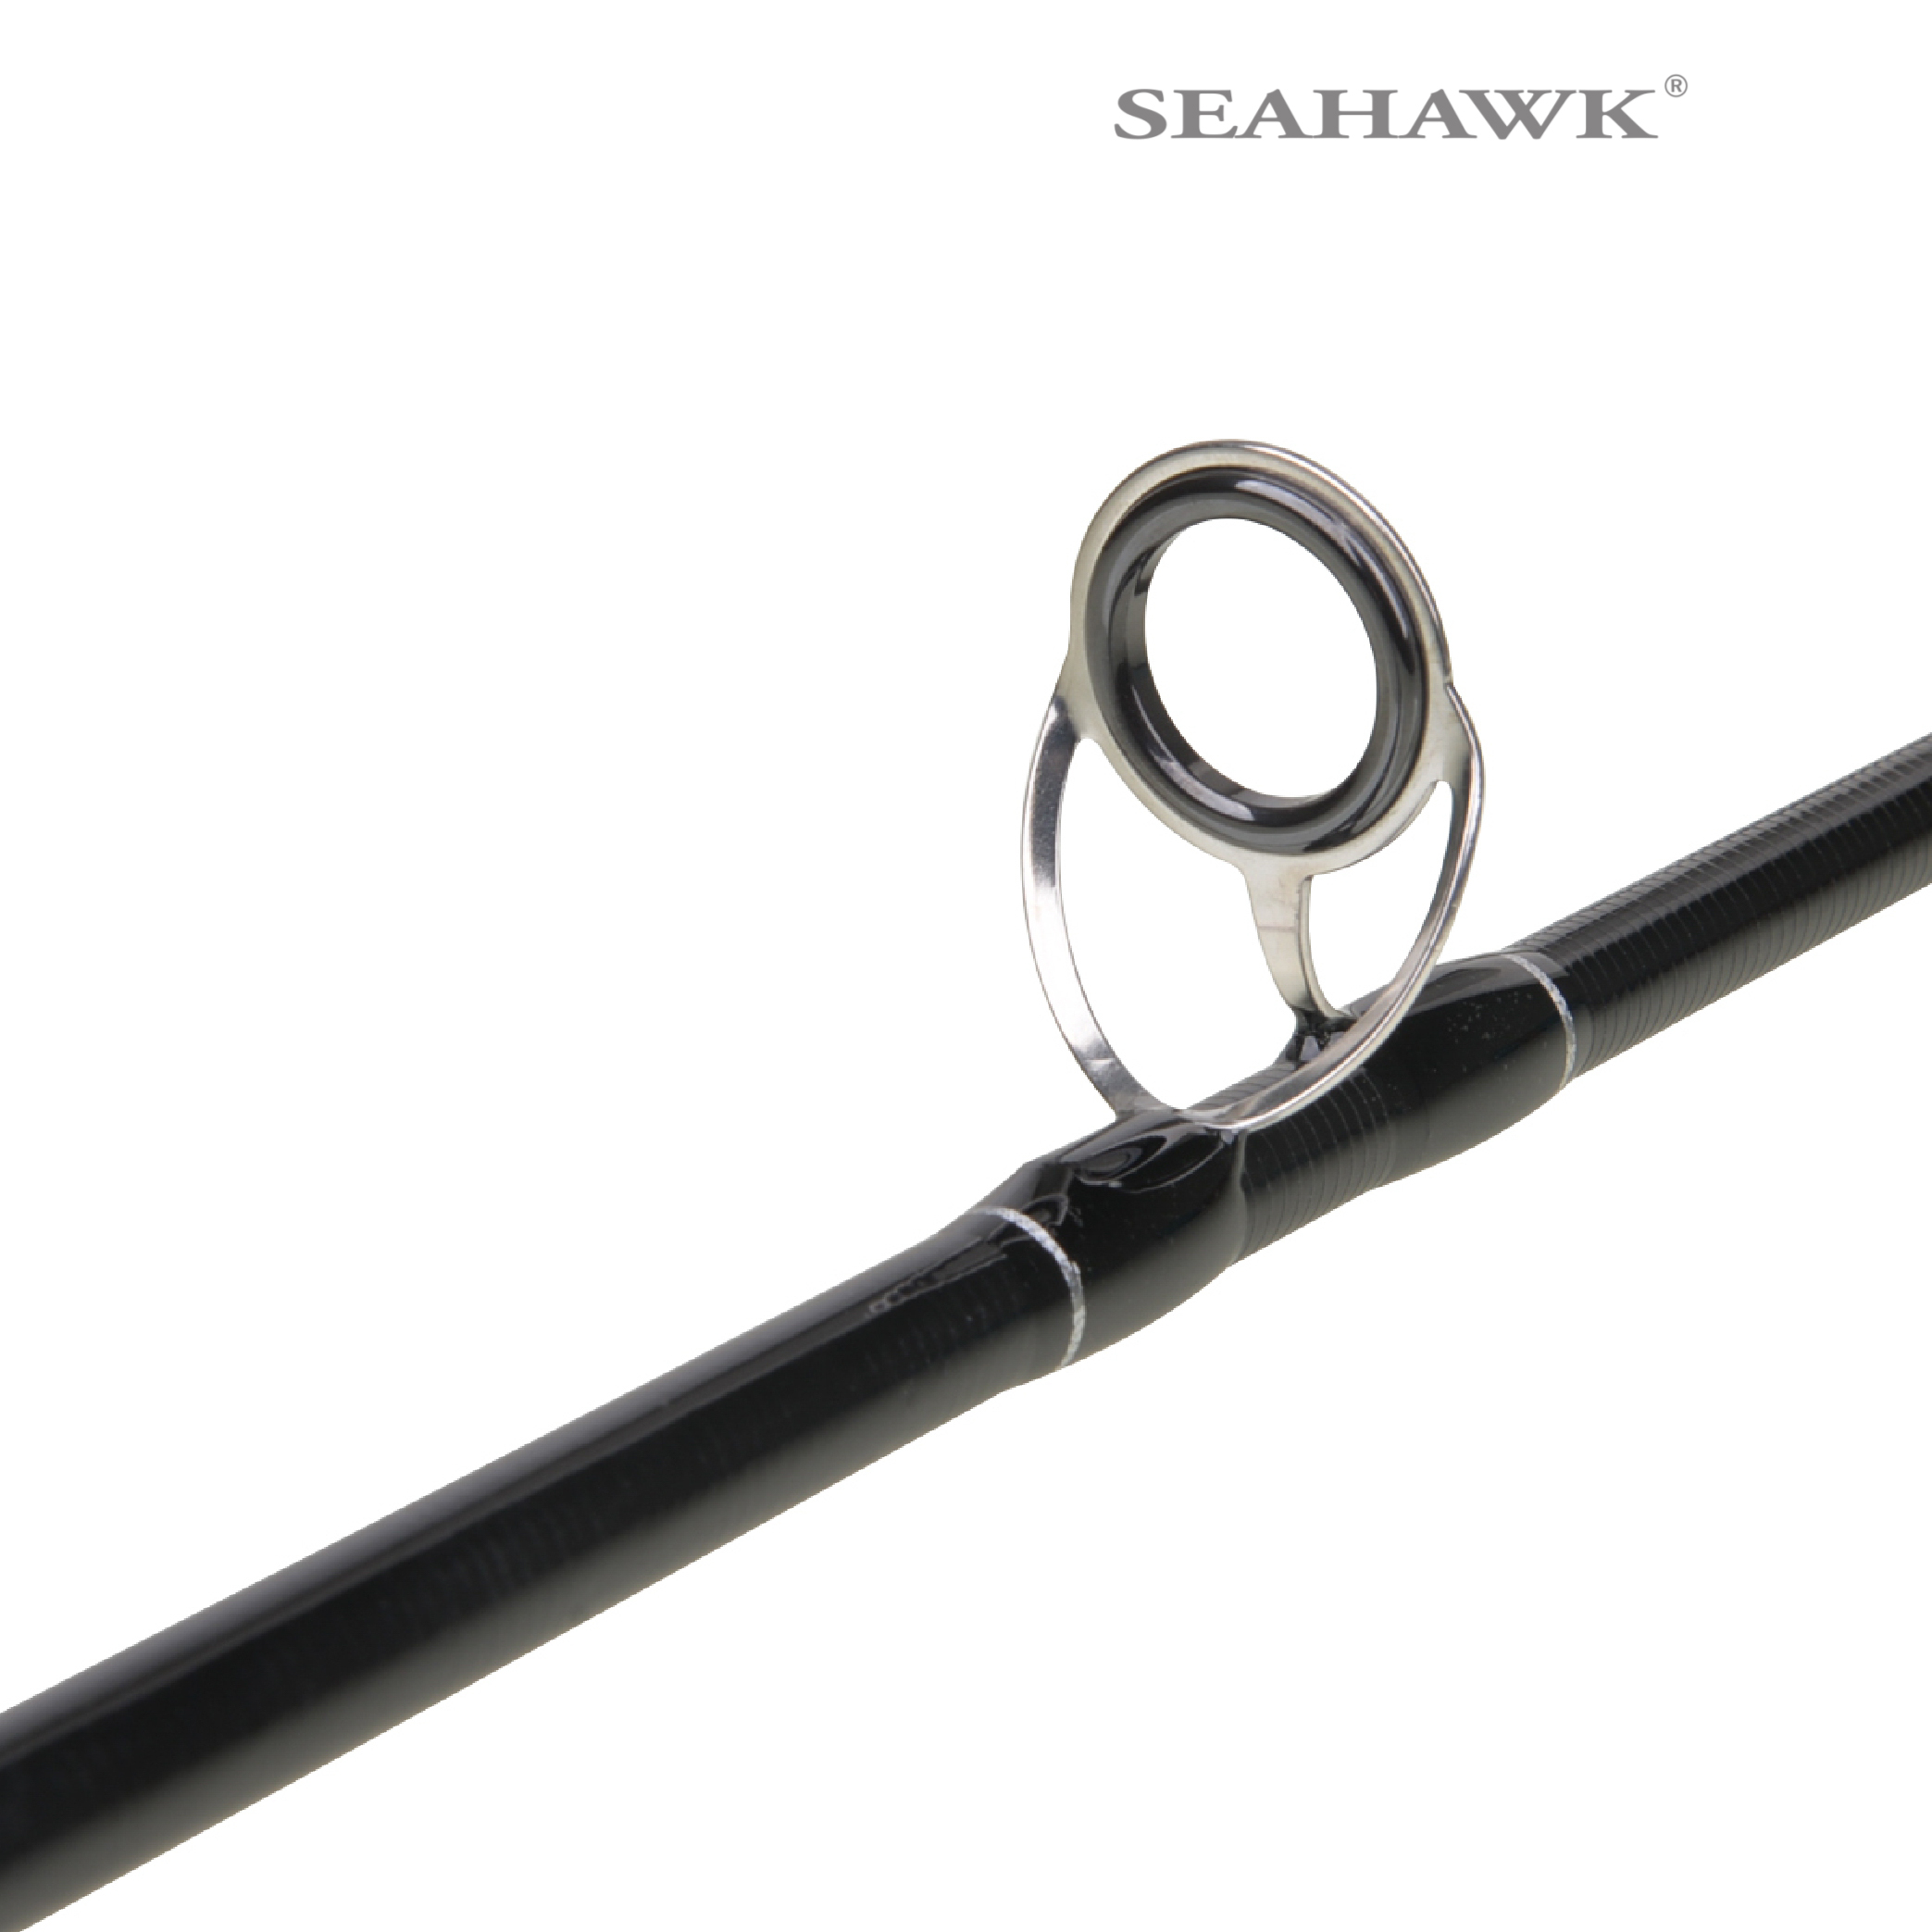 Seahawk Power Seven PS 02